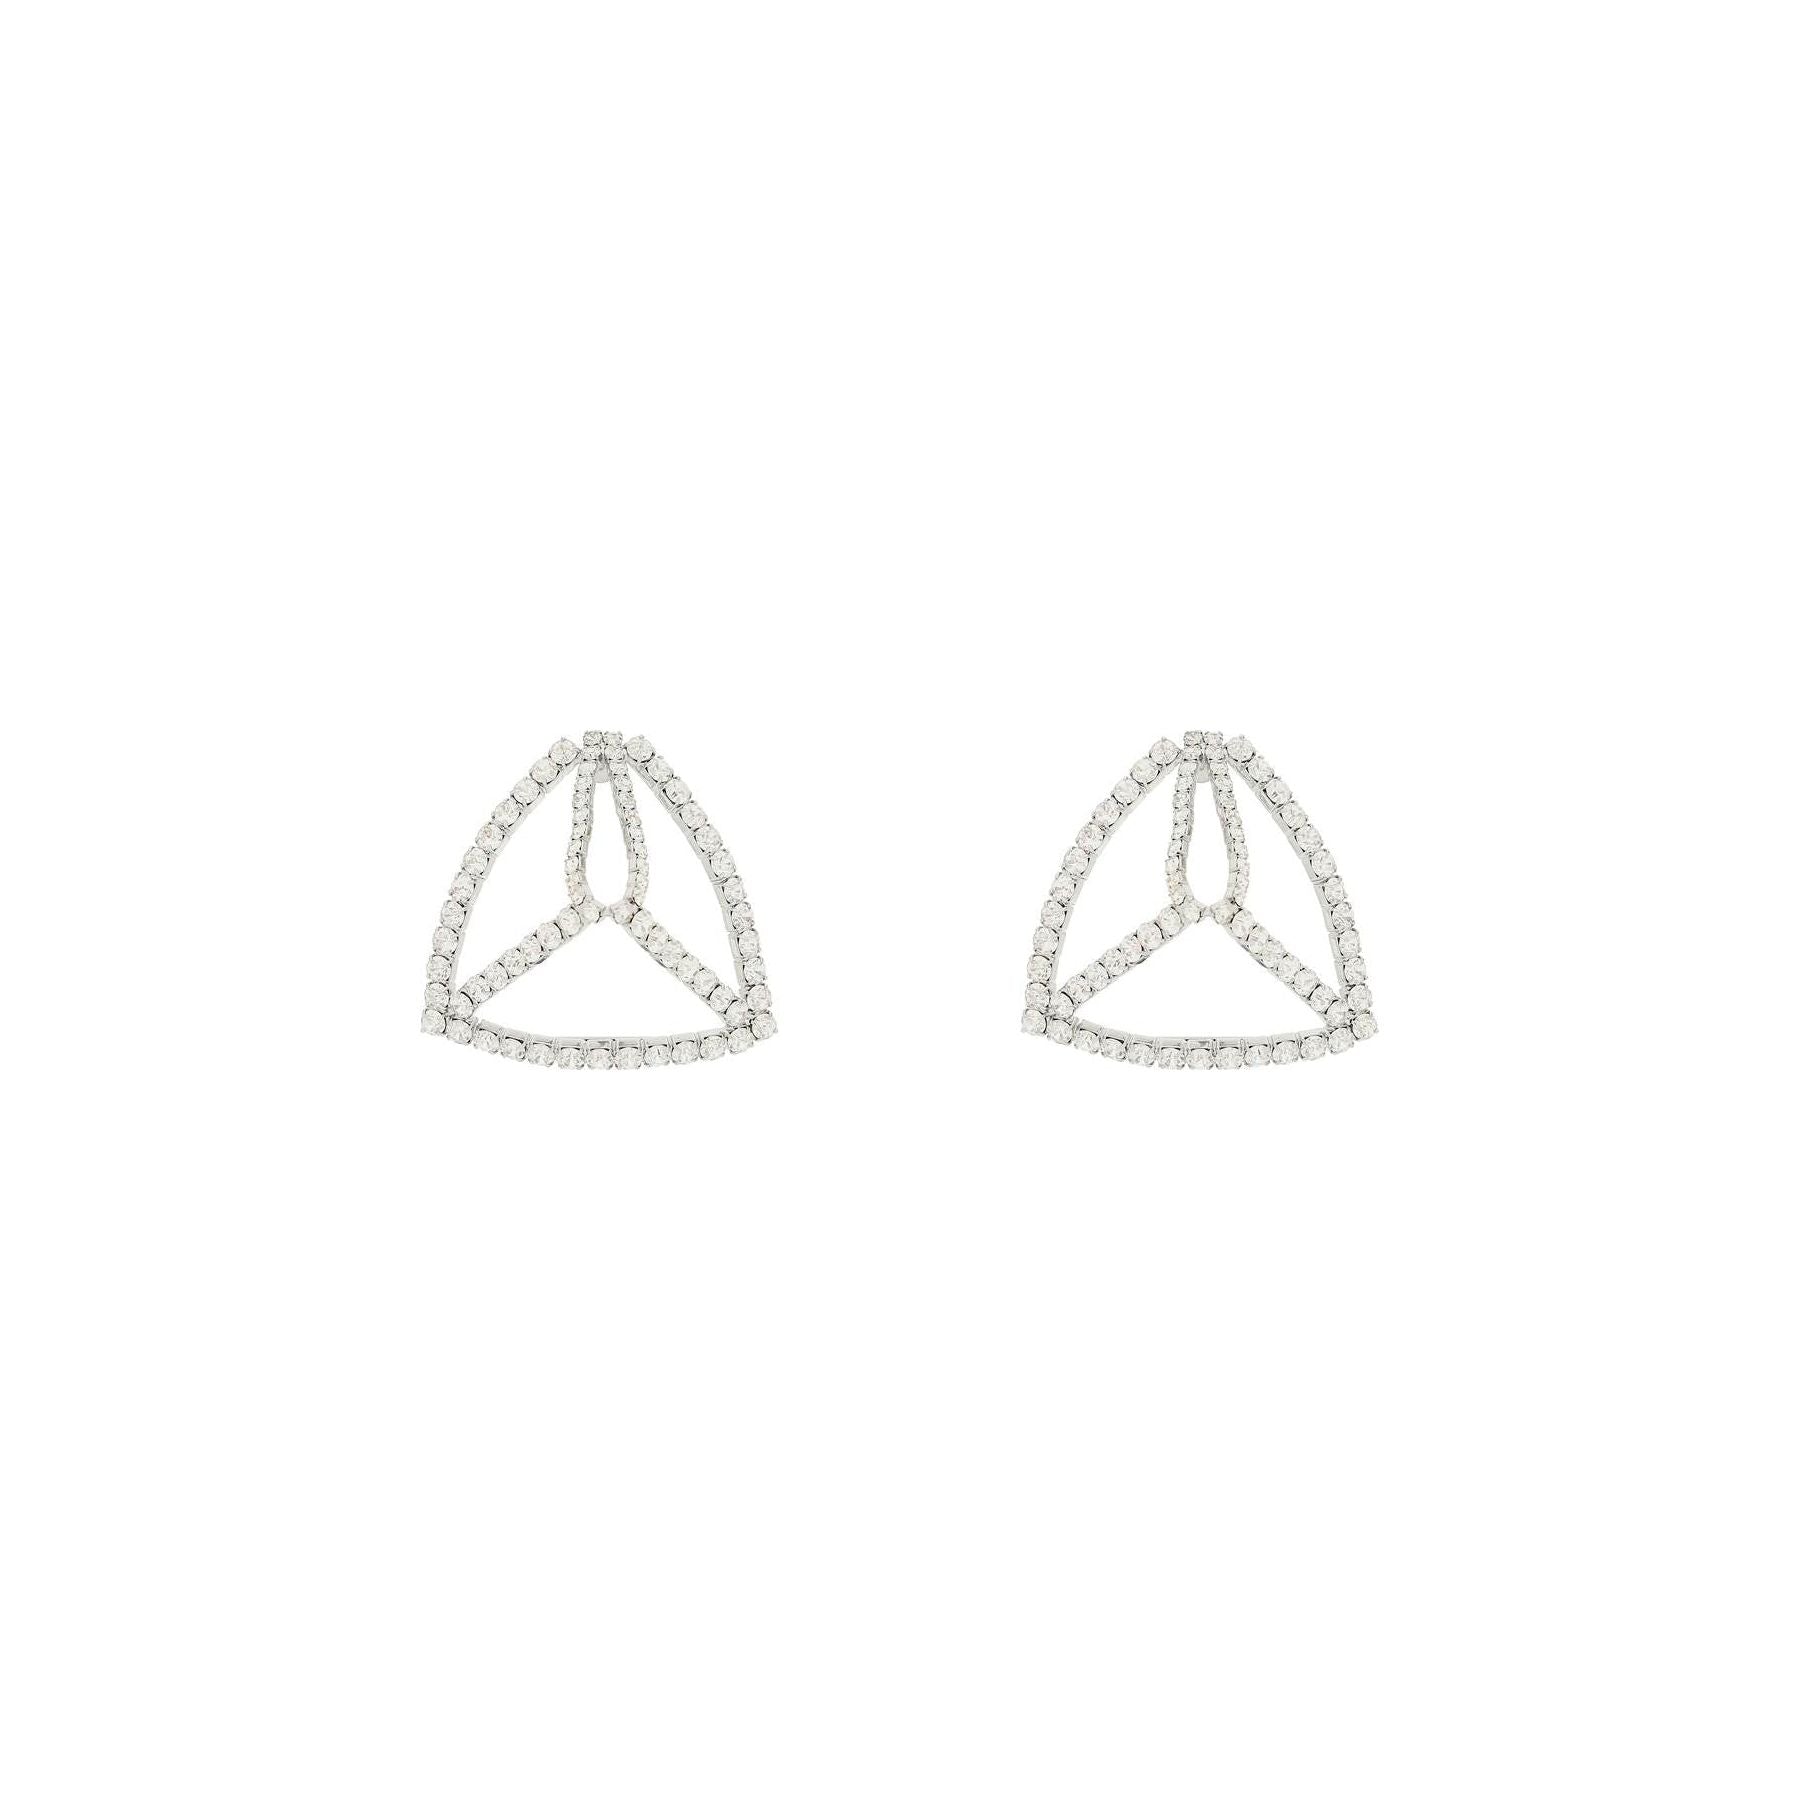 'Crystal Pyramid' Earrings